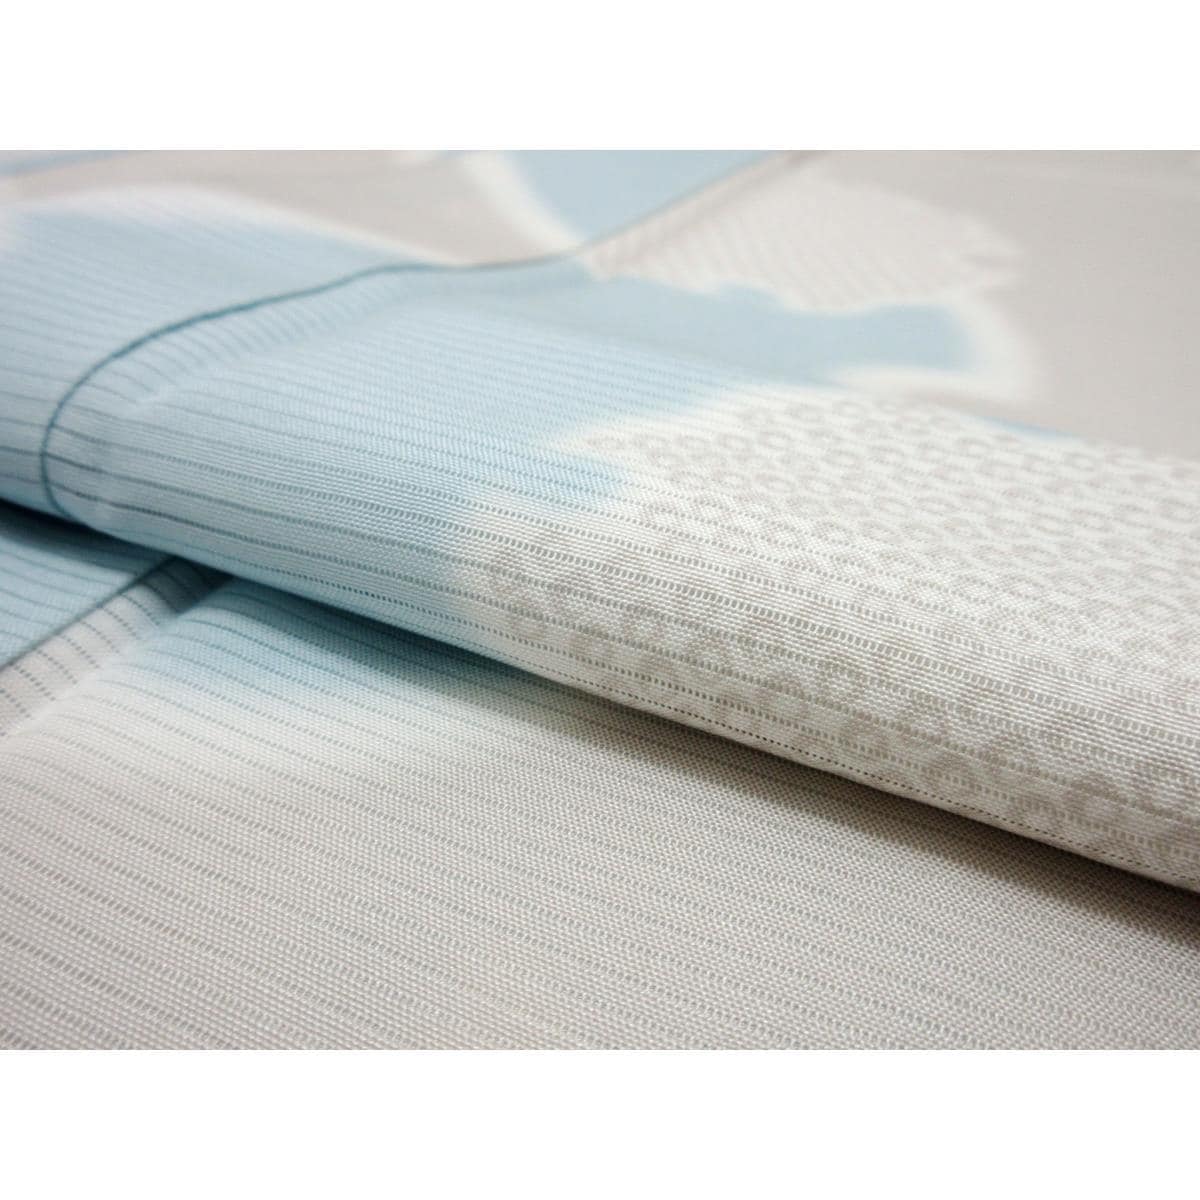 [Unused items] Single garment, small pattern of silk weave